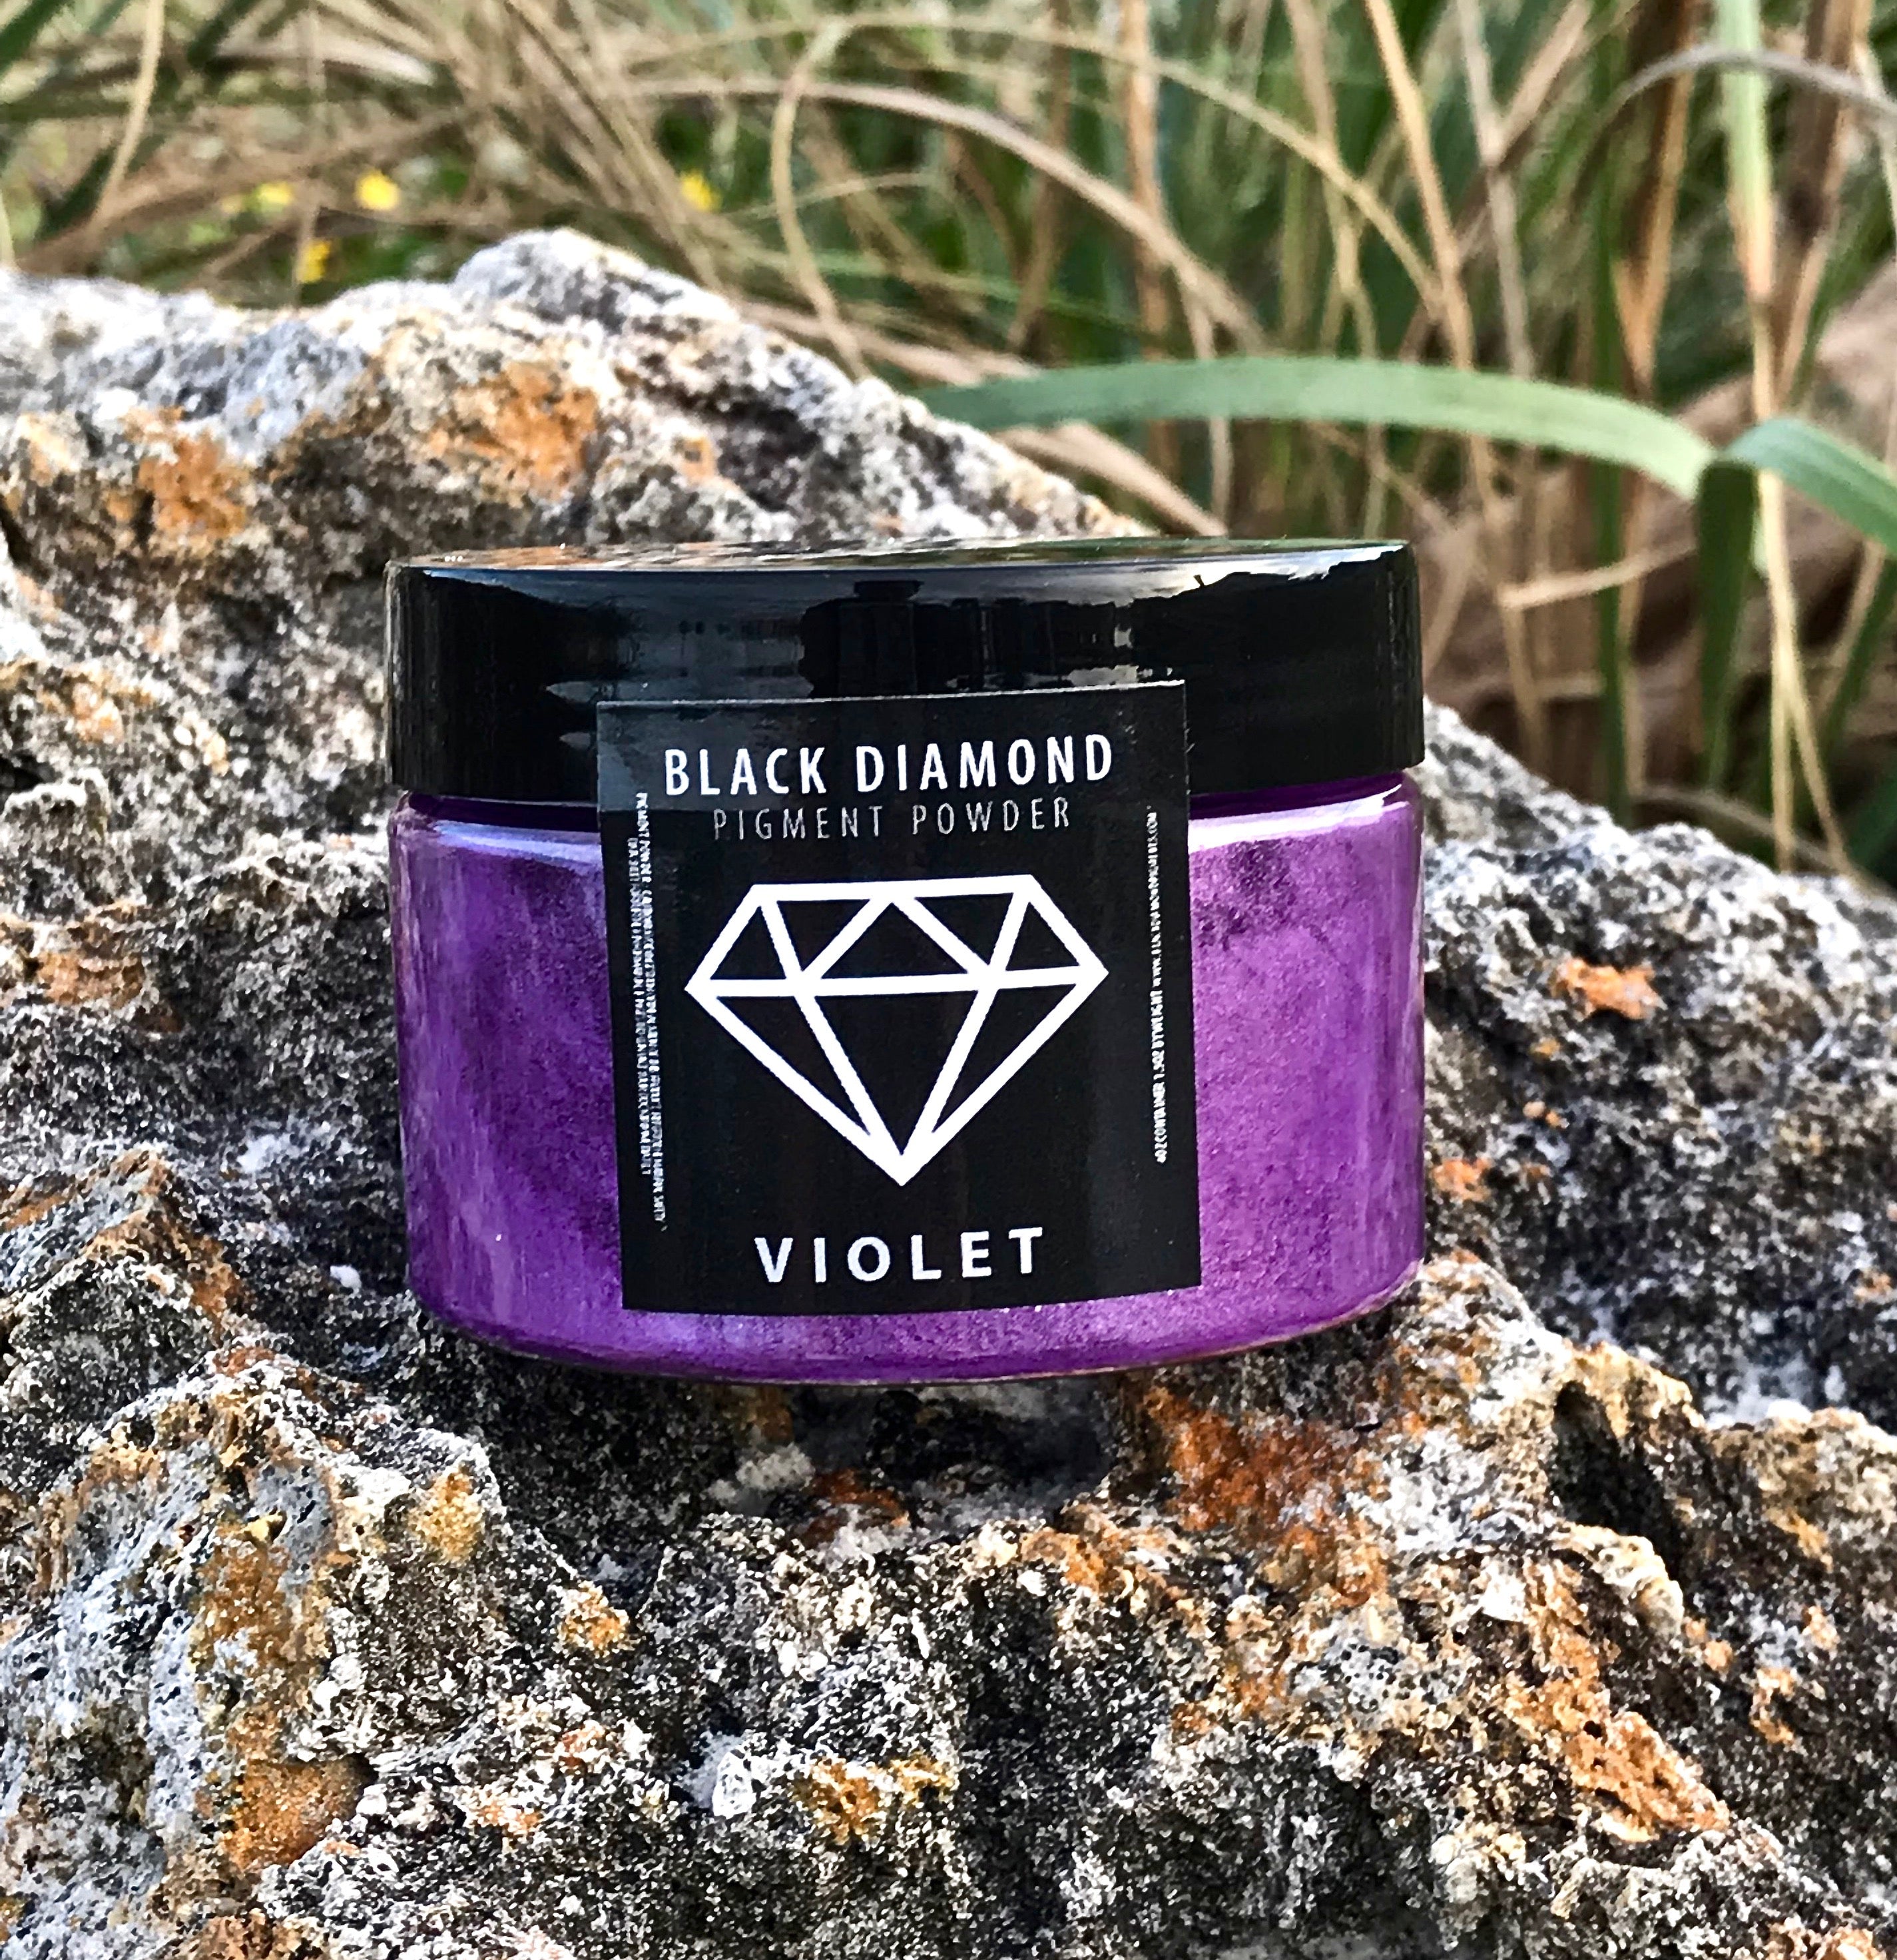 42g "VIOLET" Make-A-Wish Black Diamond Pigments